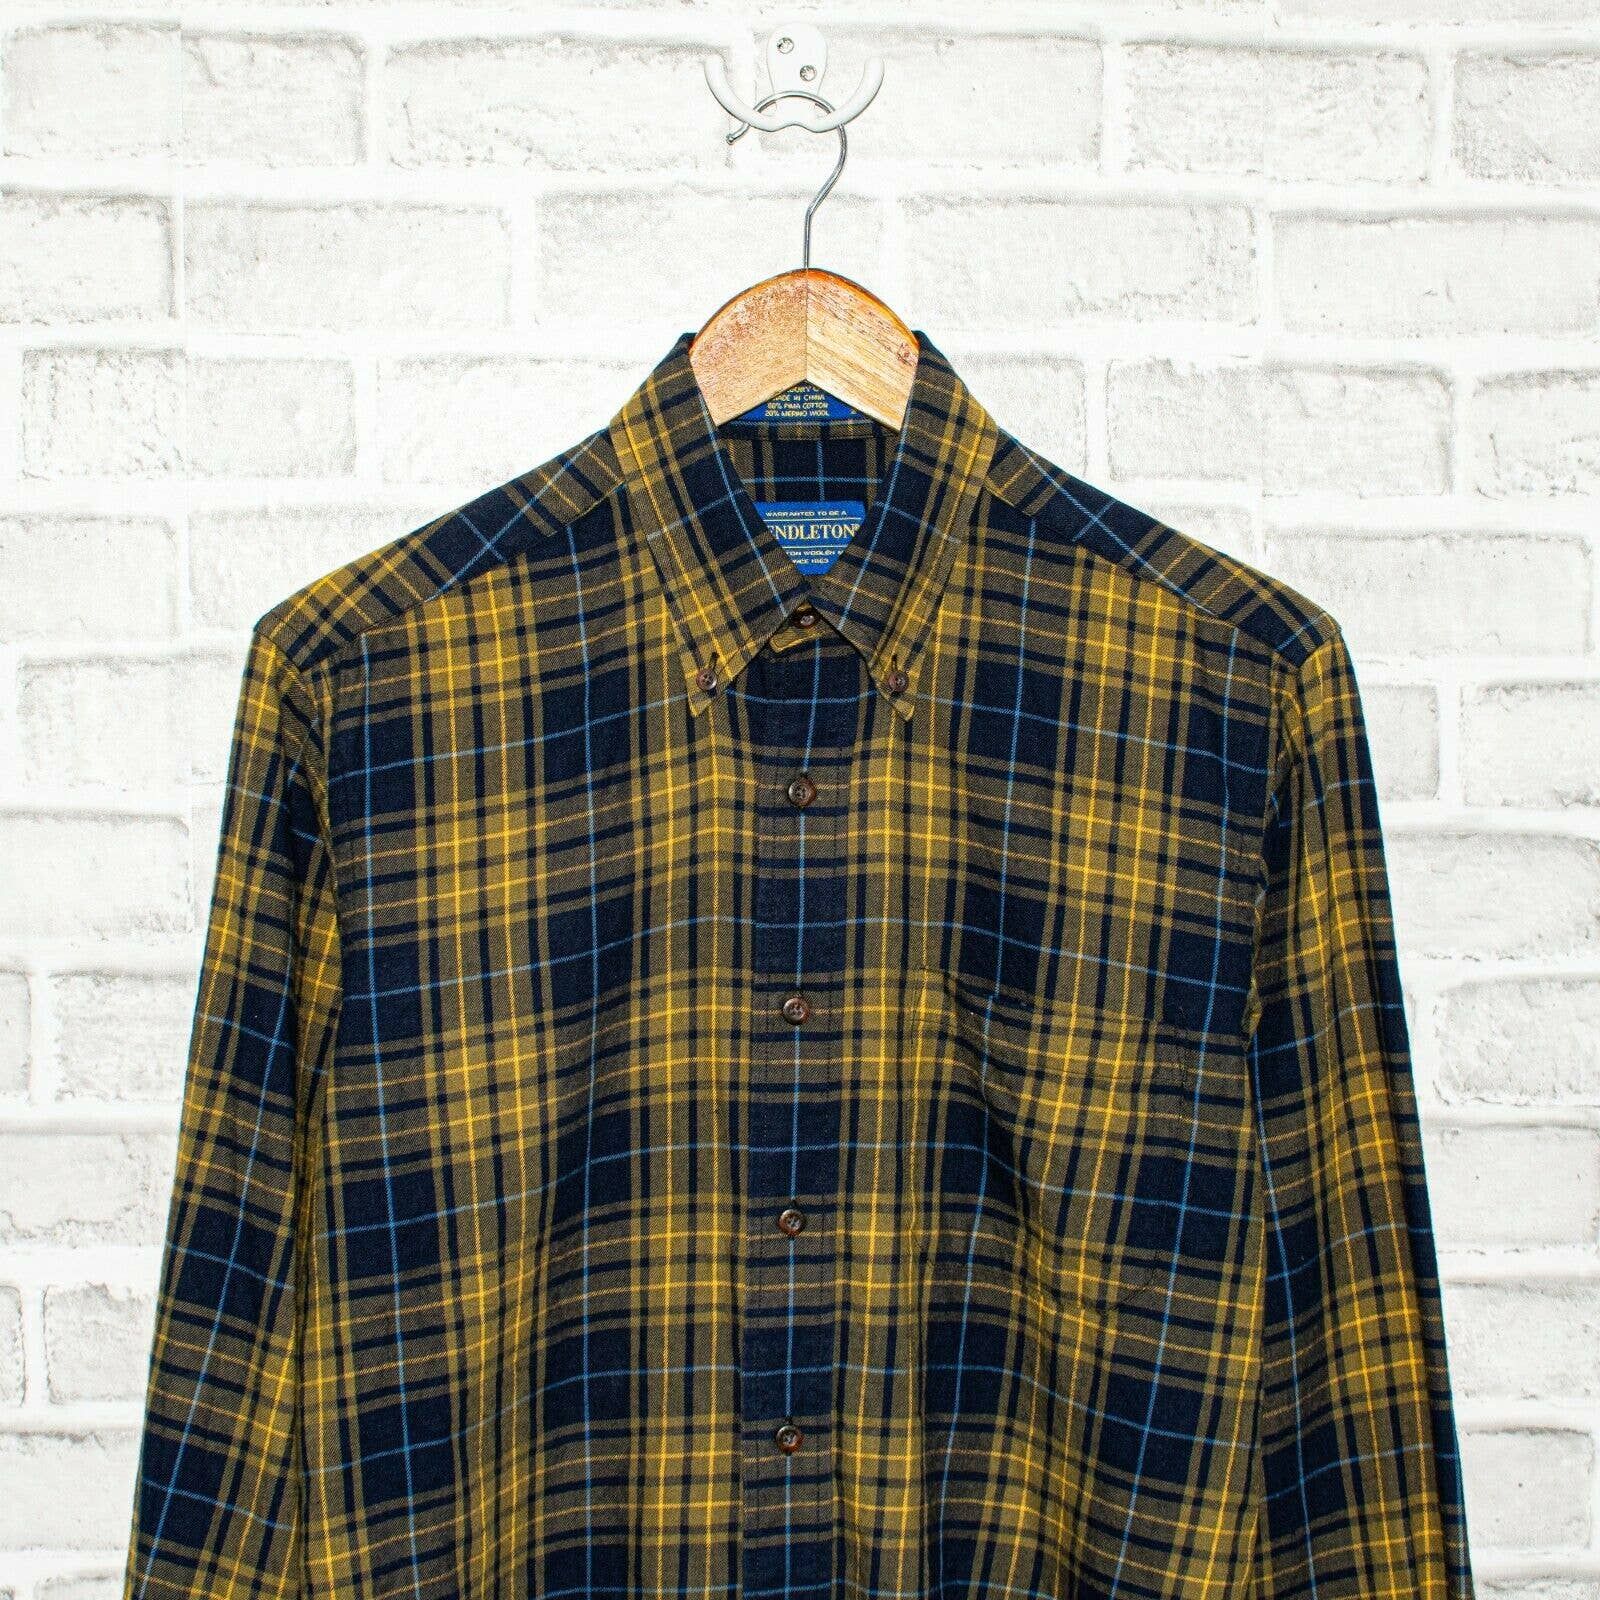 Pendleton Pendleton Flannel Shirt Brown Blue Plaid Cotton wool Size US S / EU 44-46 / 1 - 2 Preview